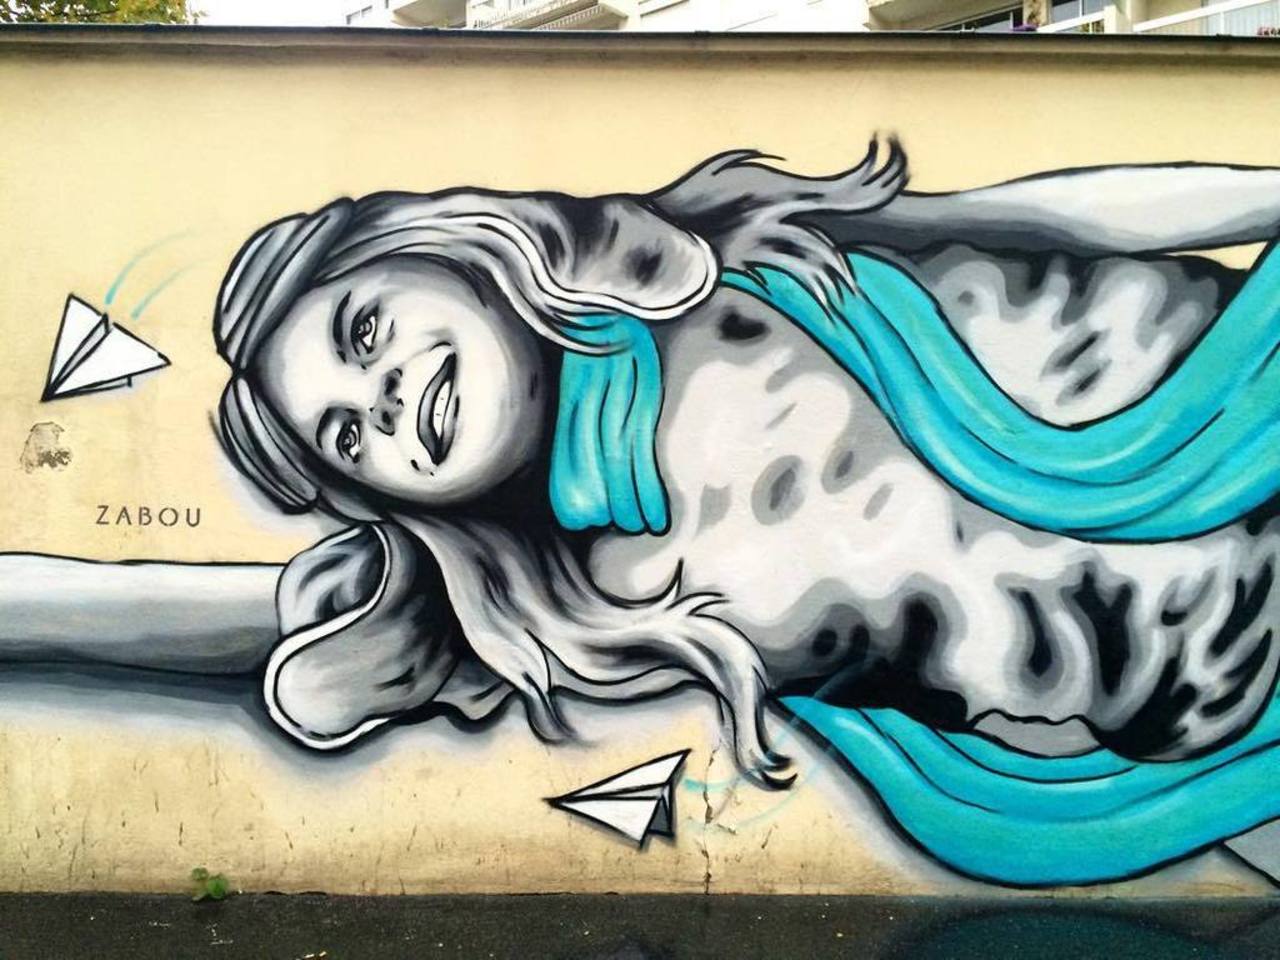 Ca plane pour elle #streetart by @zabouartist #zabou #graffiti #streetartparis #parisstreetart #paris13 #graffitiar… https://t.co/9dqJW6Mhi9